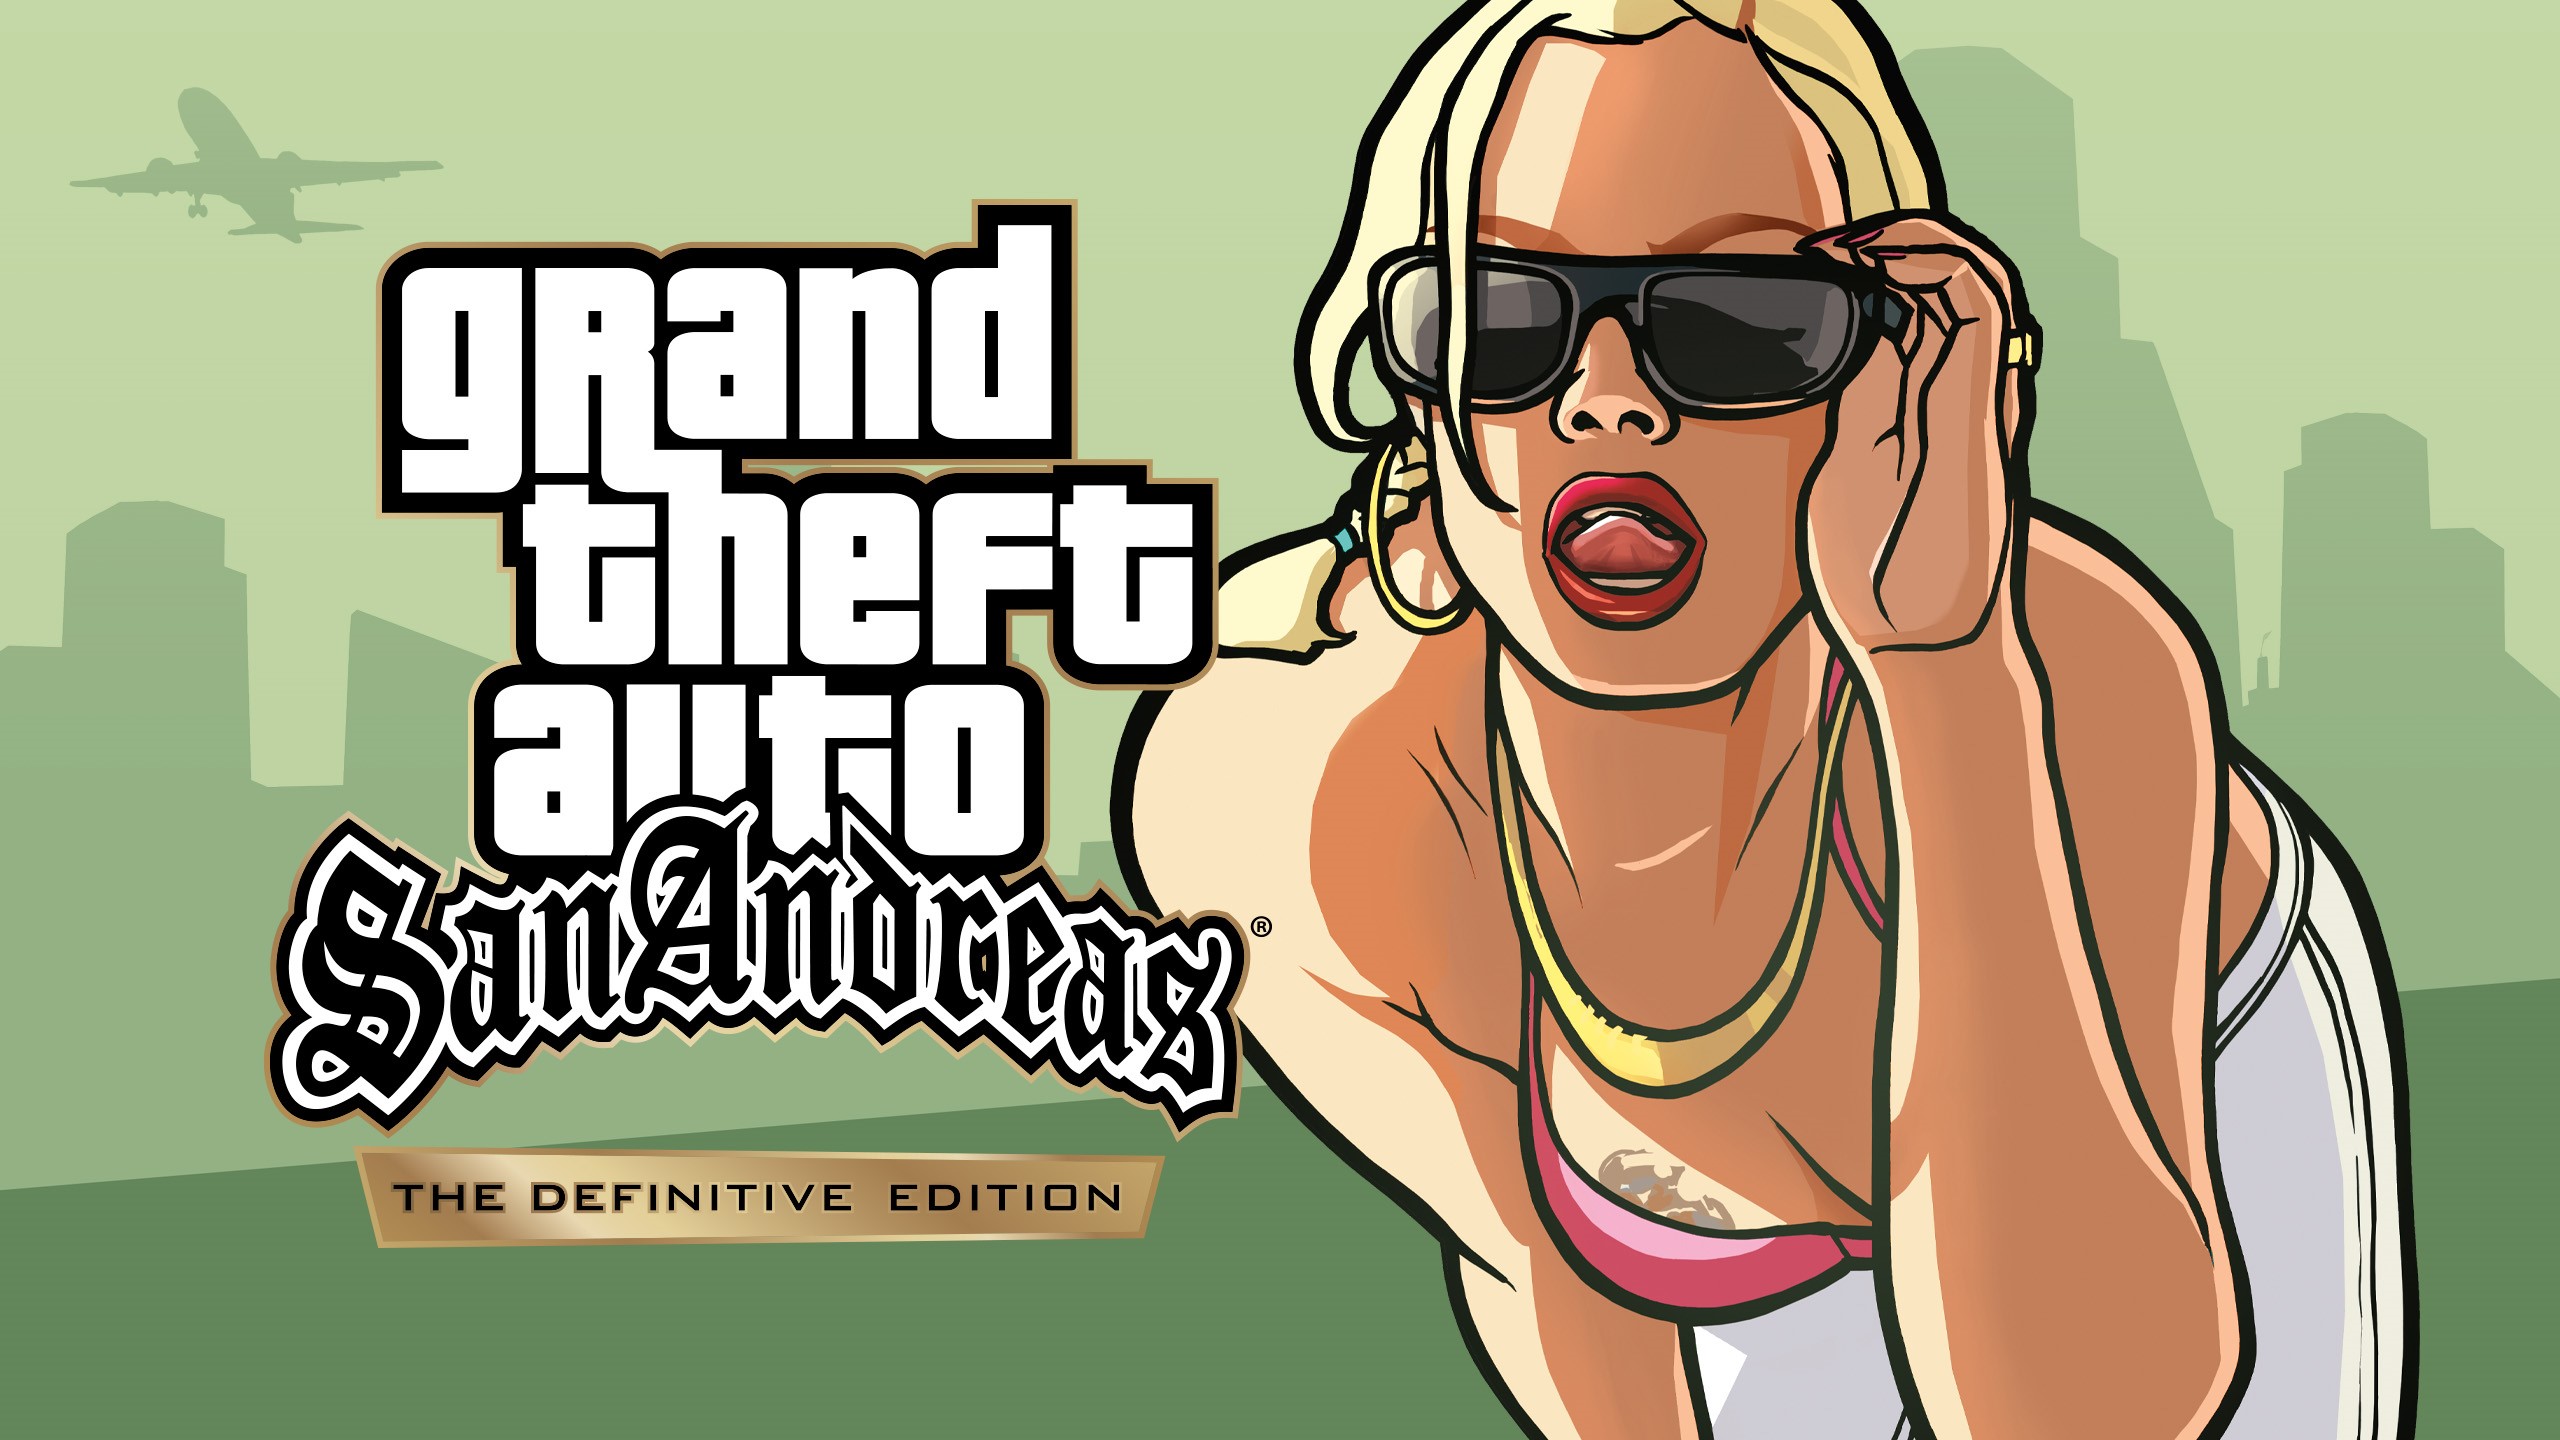 Сан андреас дефинитив эдишн. Grand Theft auto Definitive Edition. GTA андреас the Definitive Edition. GTA sa Definitive Edition. GTA Trilogy Definitive Edition.